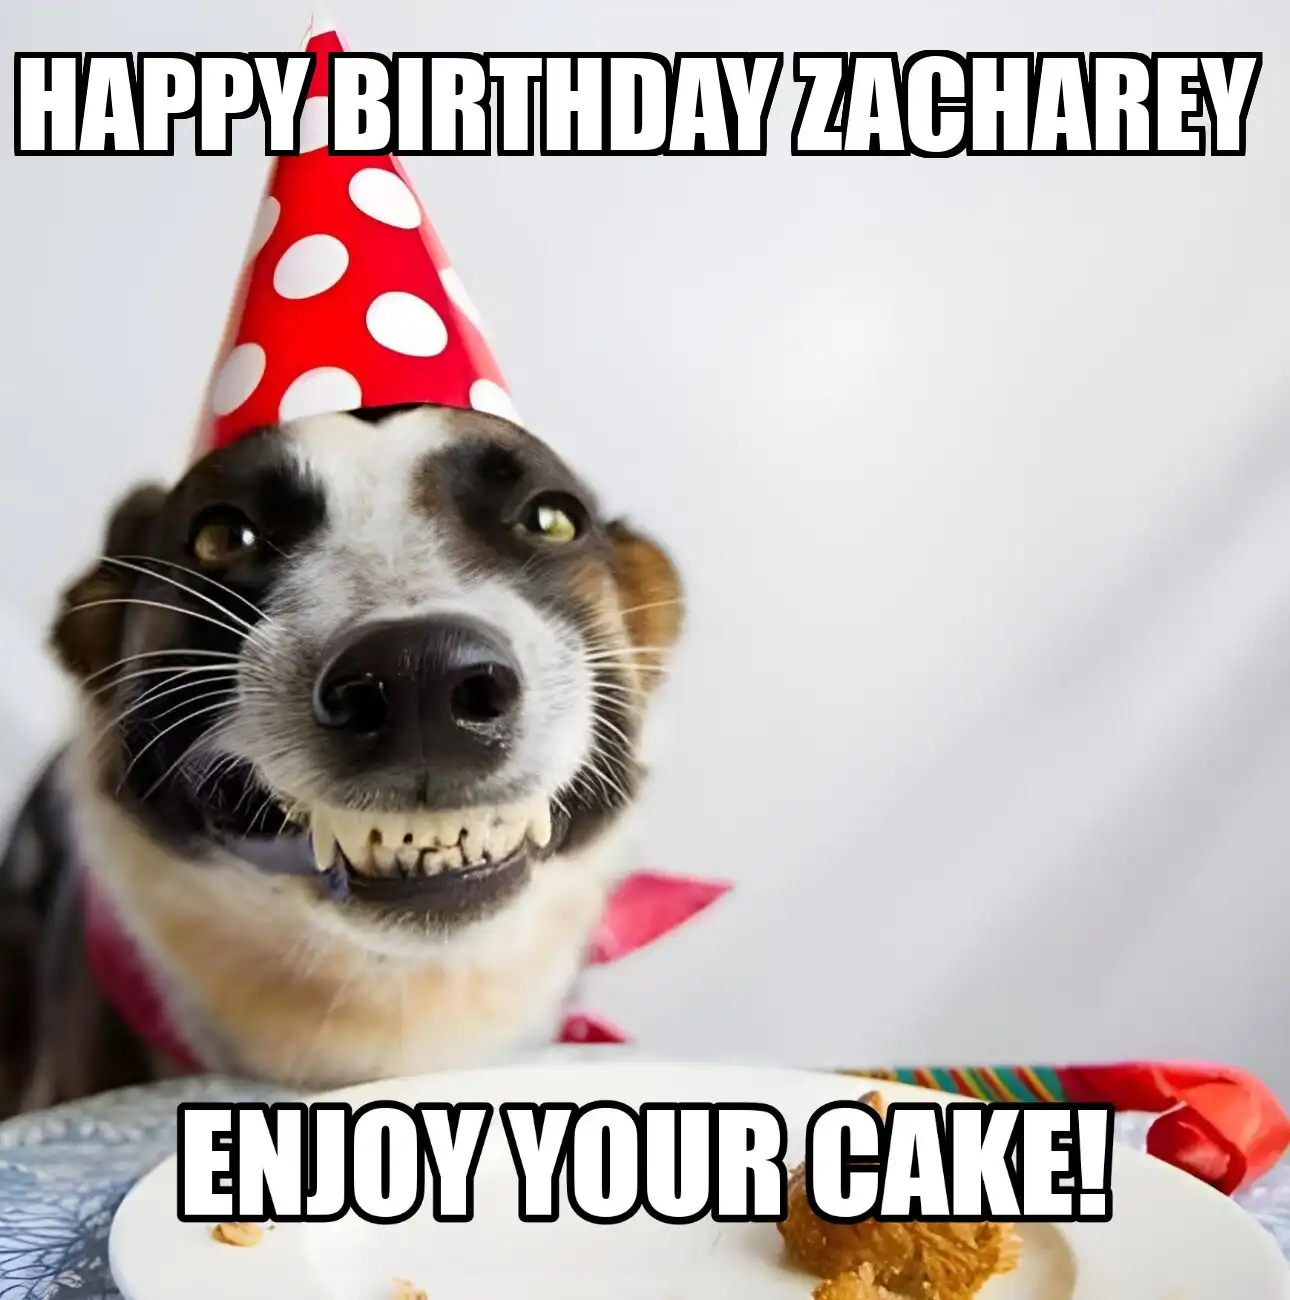 Happy Birthday Zacharey Enjoy Your Cake Dog Meme